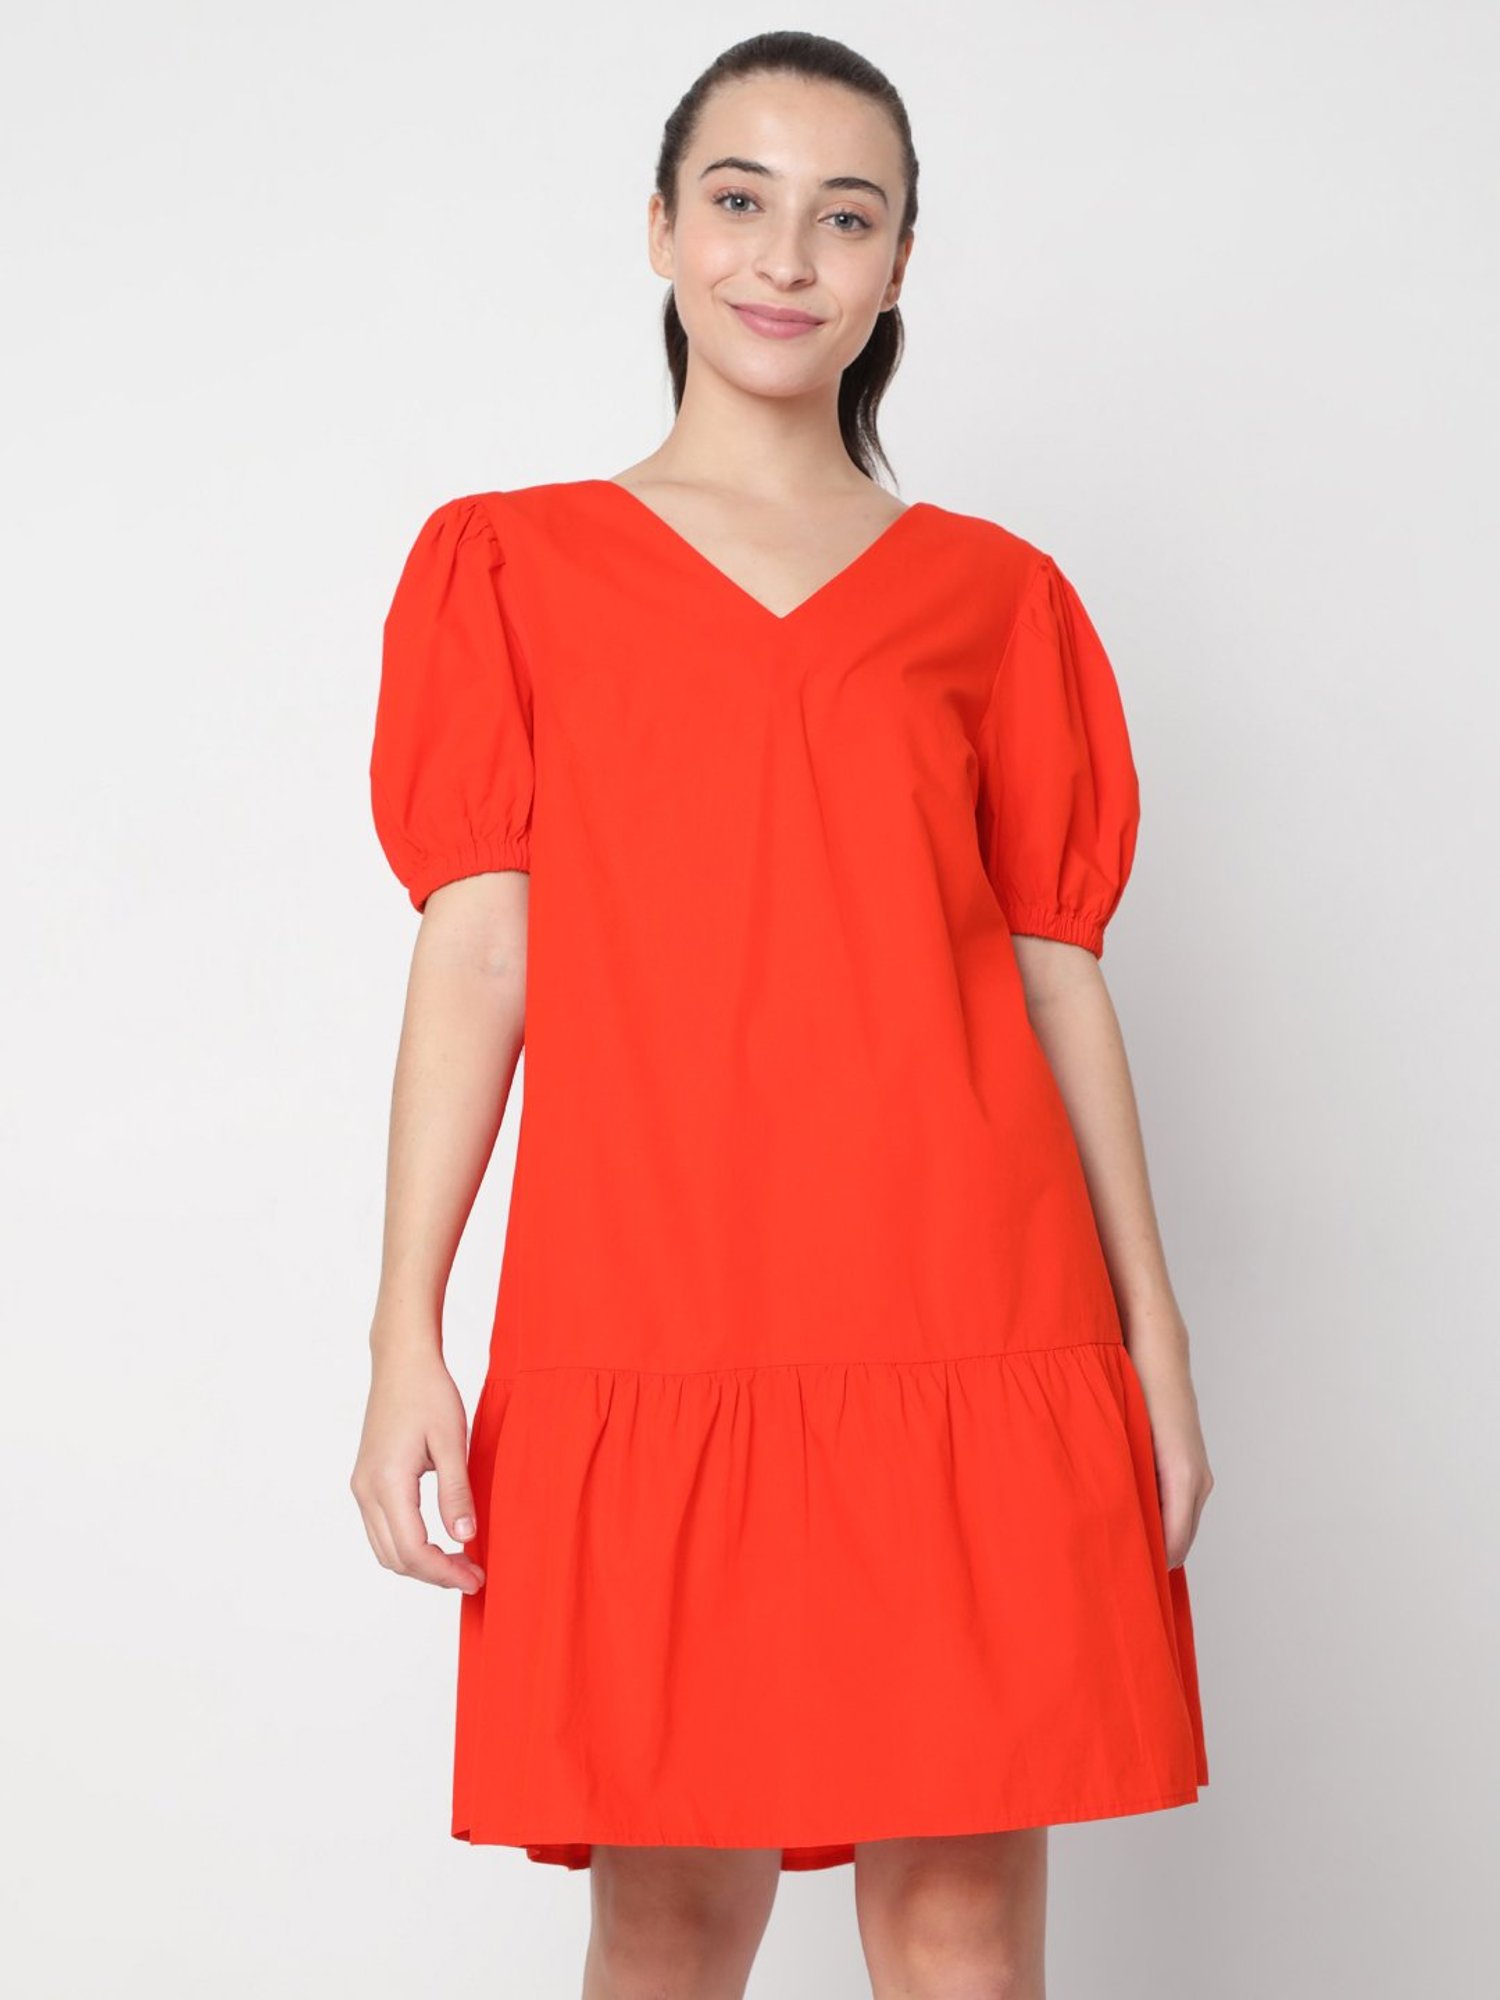 Buy Vero Moda Coral Midi Peplum Dress Women's Online @ CLiQ